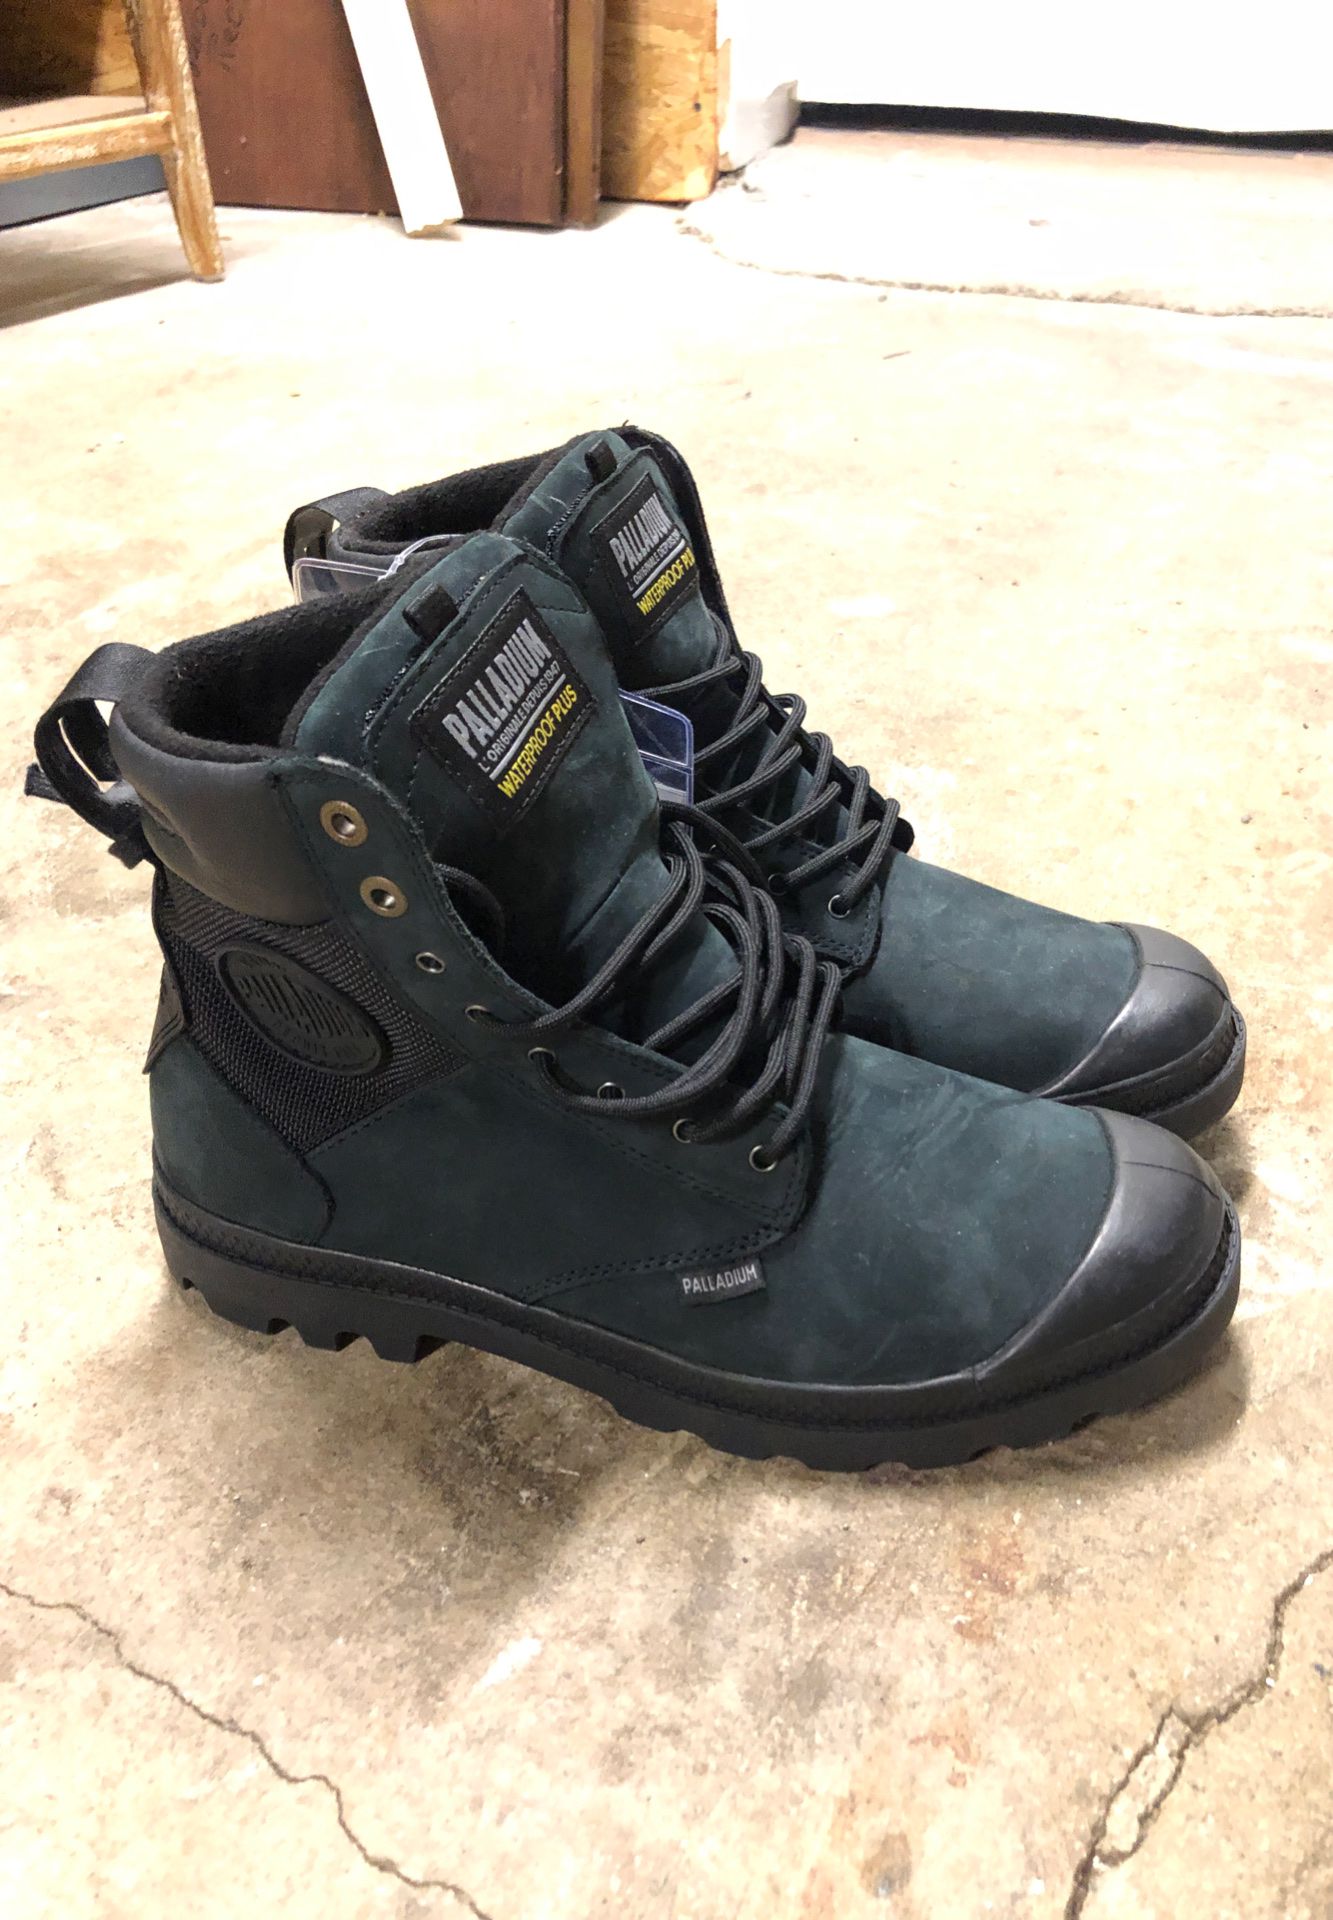 Palladium Waterproof Boots